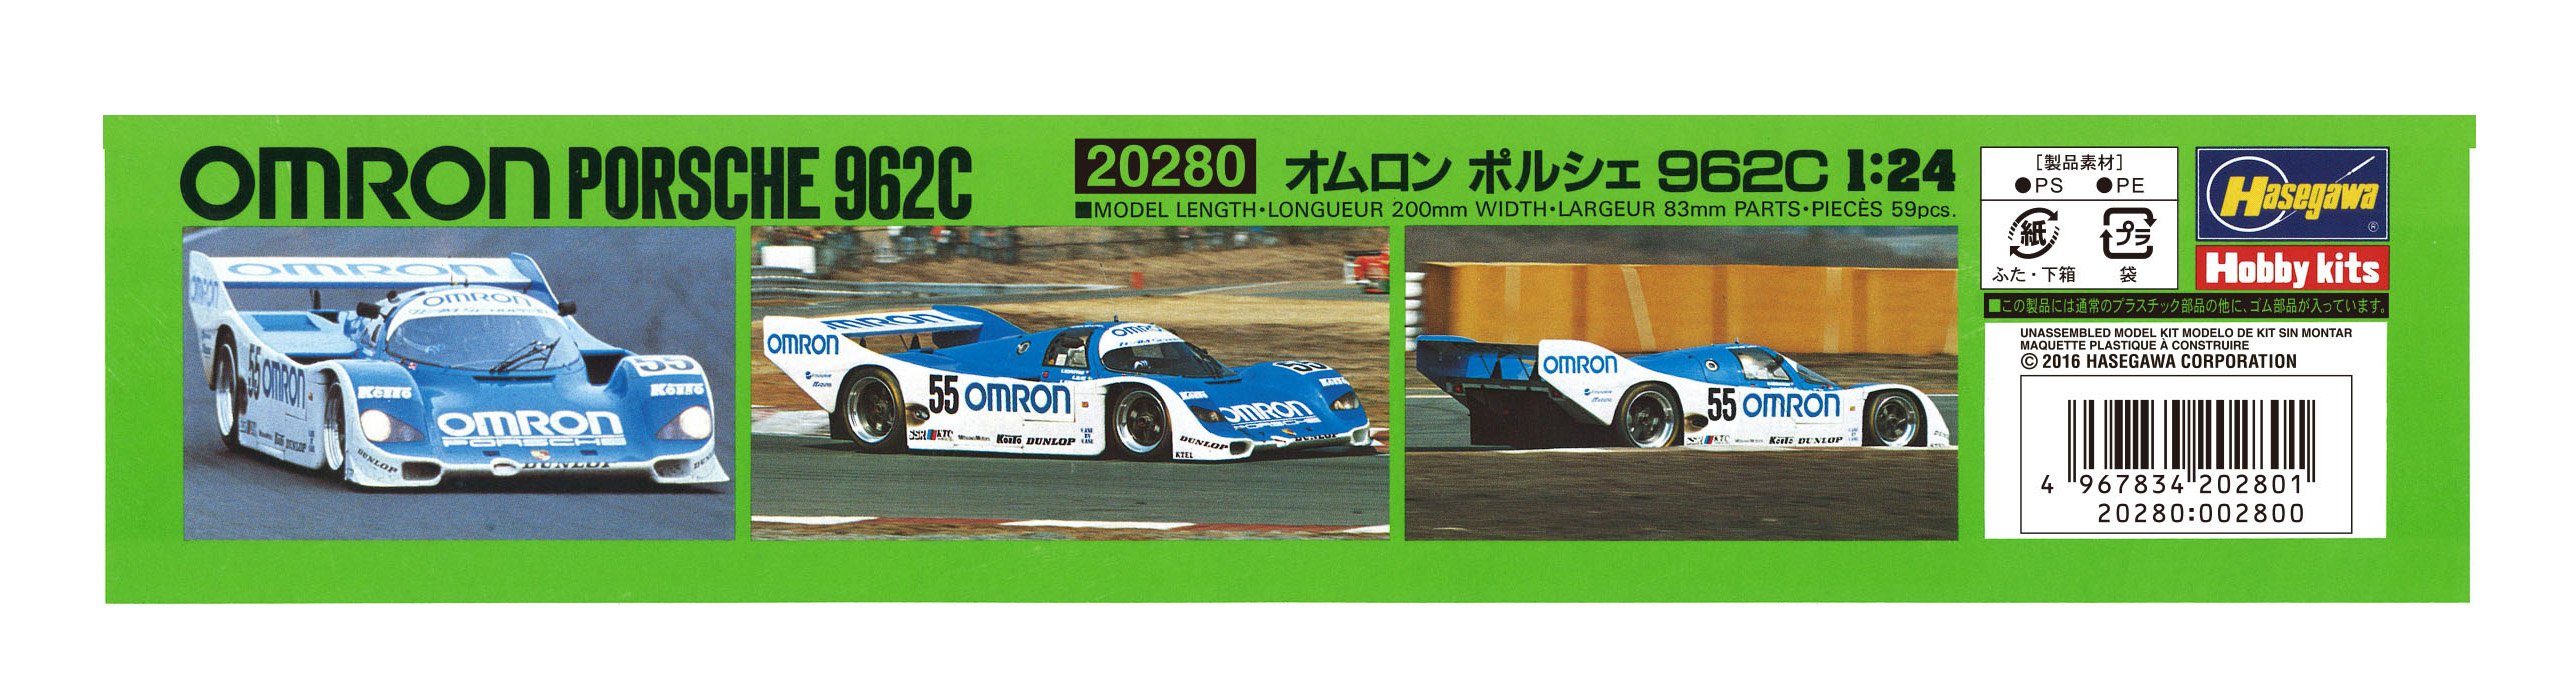 HASEGAWA 20280 Omron Porsche 962C 1/24 Scale Kit